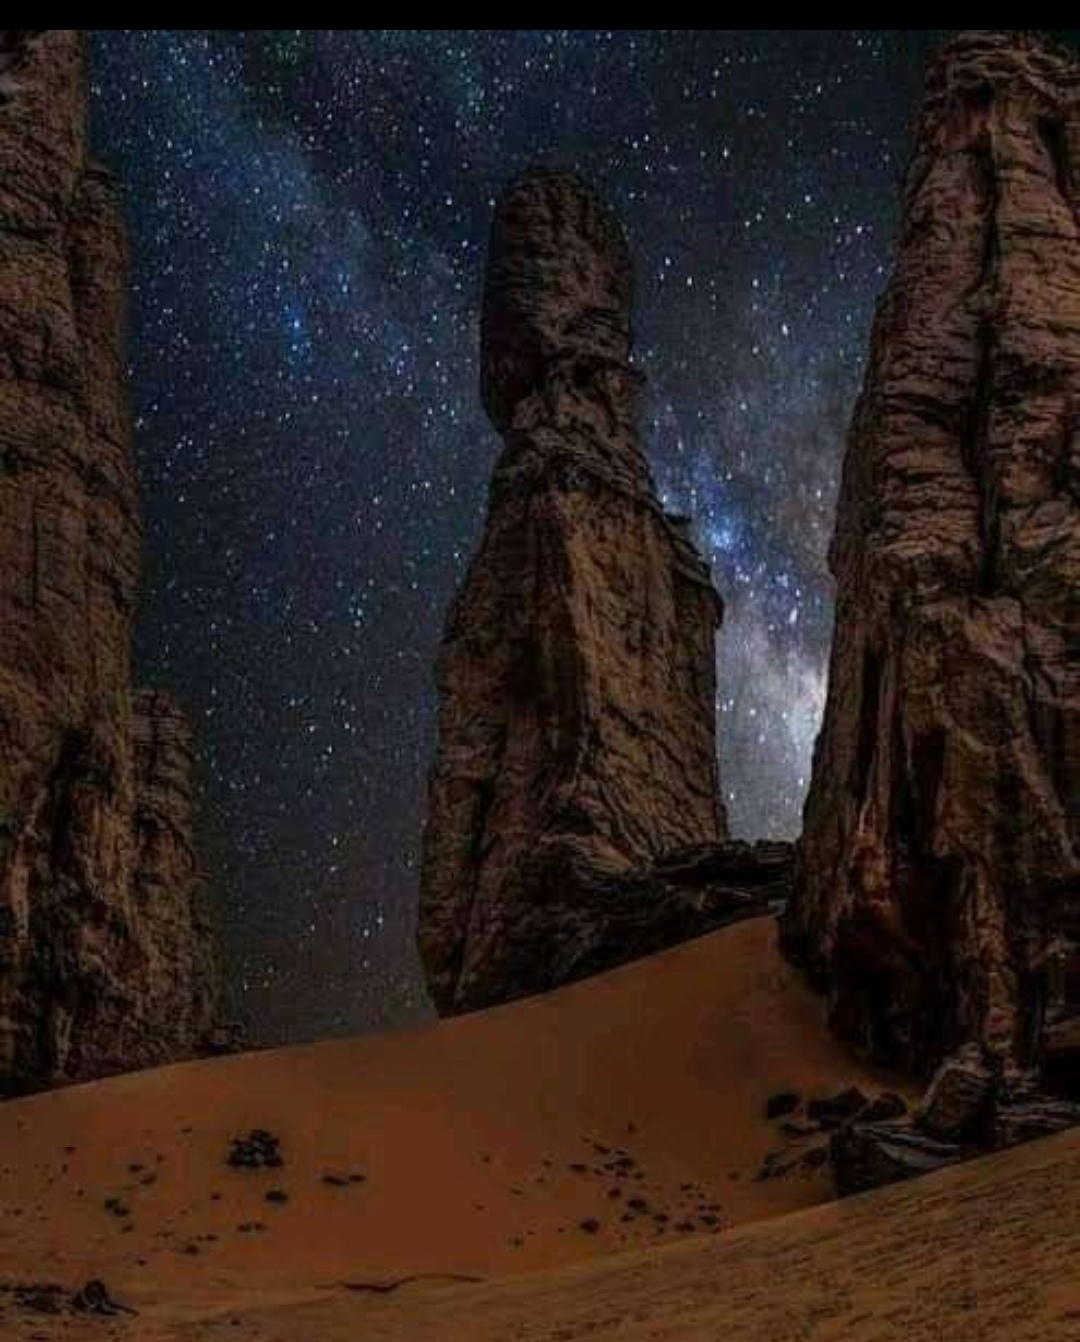 Starry Nights In The Sahara: A Desert Lover’s Dream In Algeria.